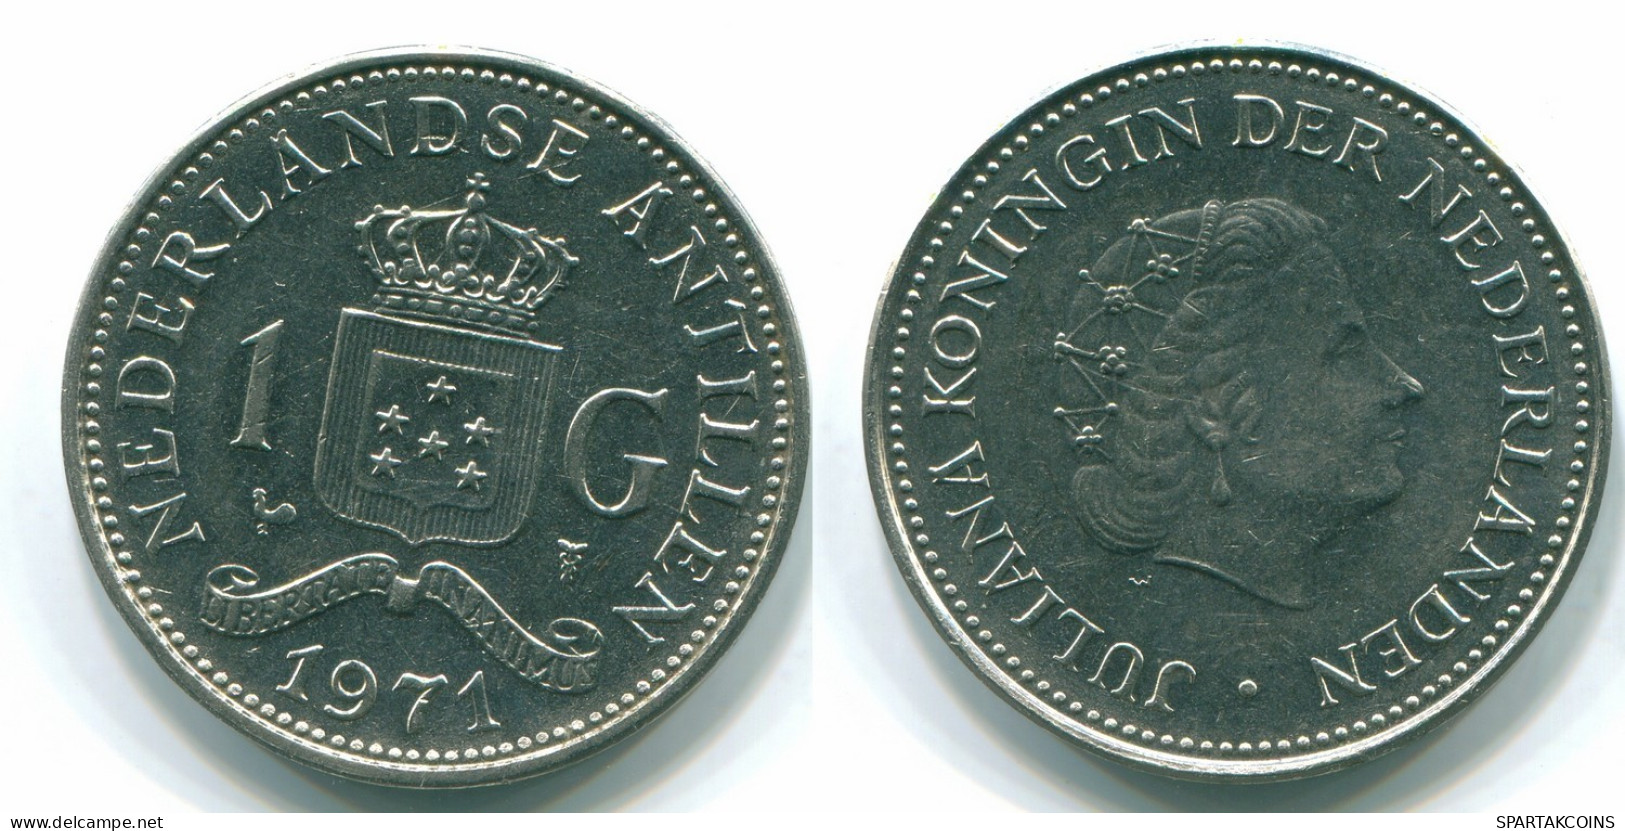 1 GULDEN 1971 NETHERLANDS ANTILLES Nickel Colonial Coin #S11938.U.A - Antilles Néerlandaises